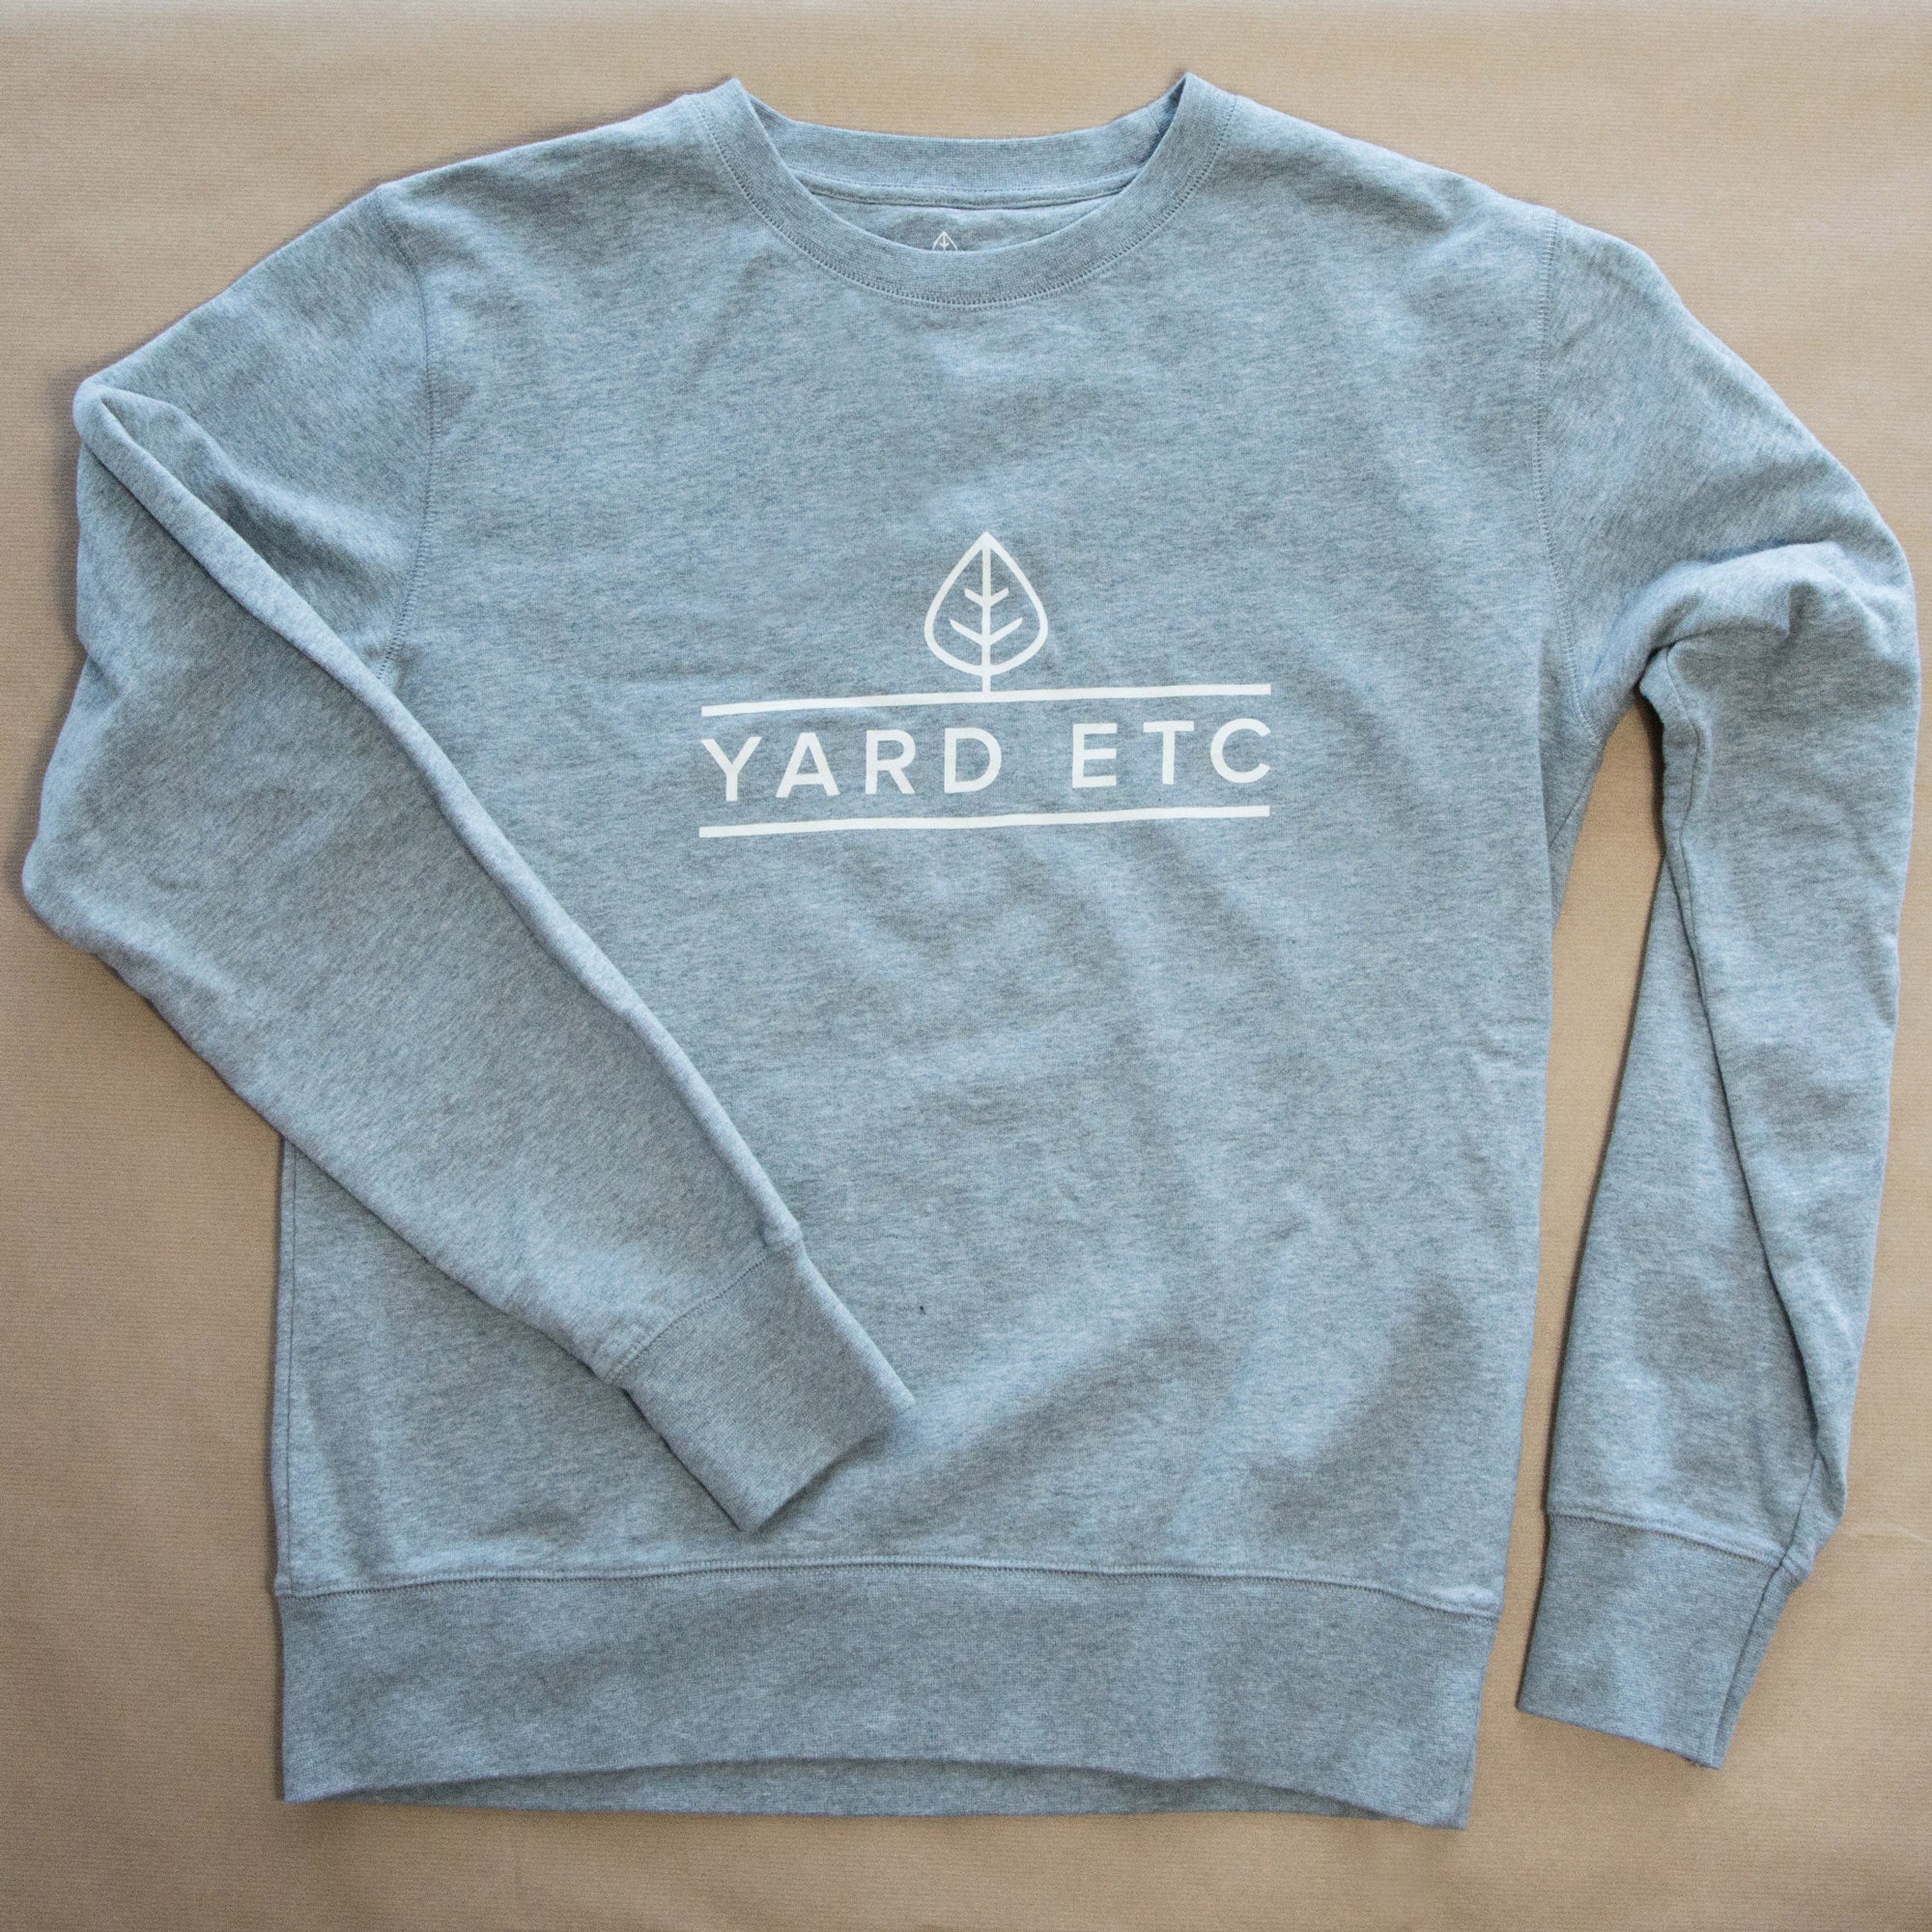 Yard Etc Sweatshirt - Mens GREY